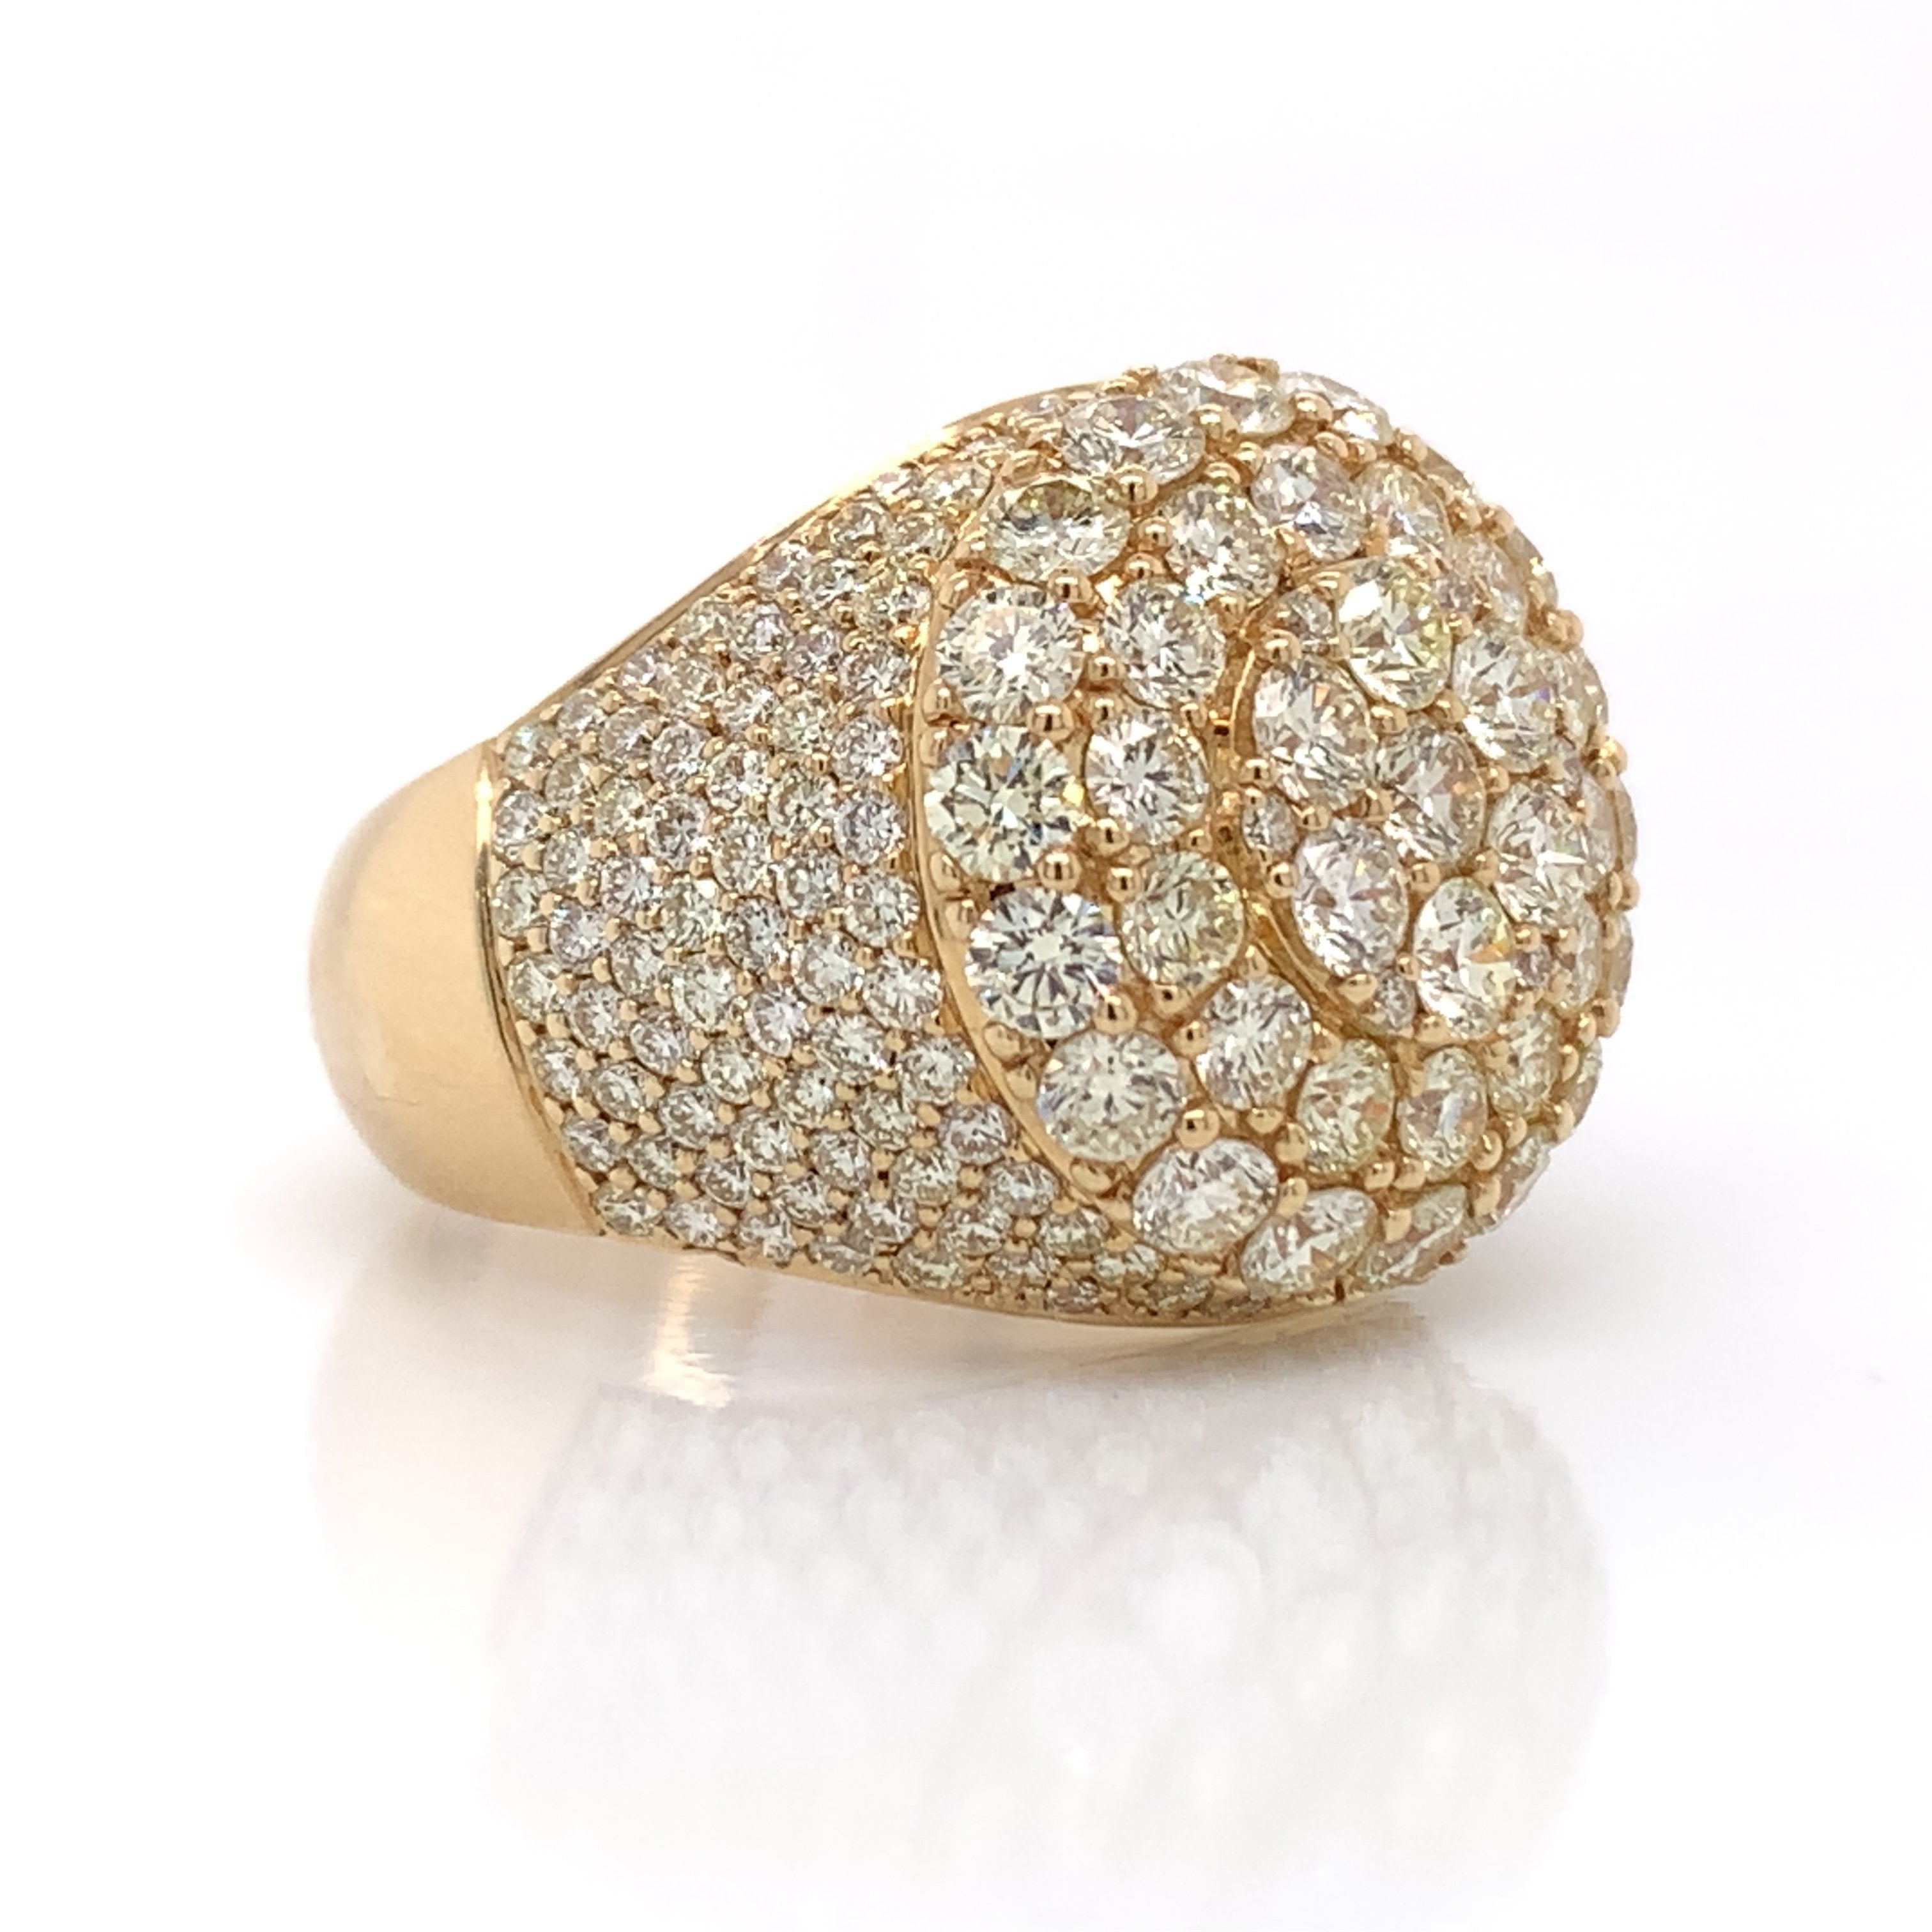 3.75 CT. Diamond Ring 10KT Gold - White Carat - USA & Canada